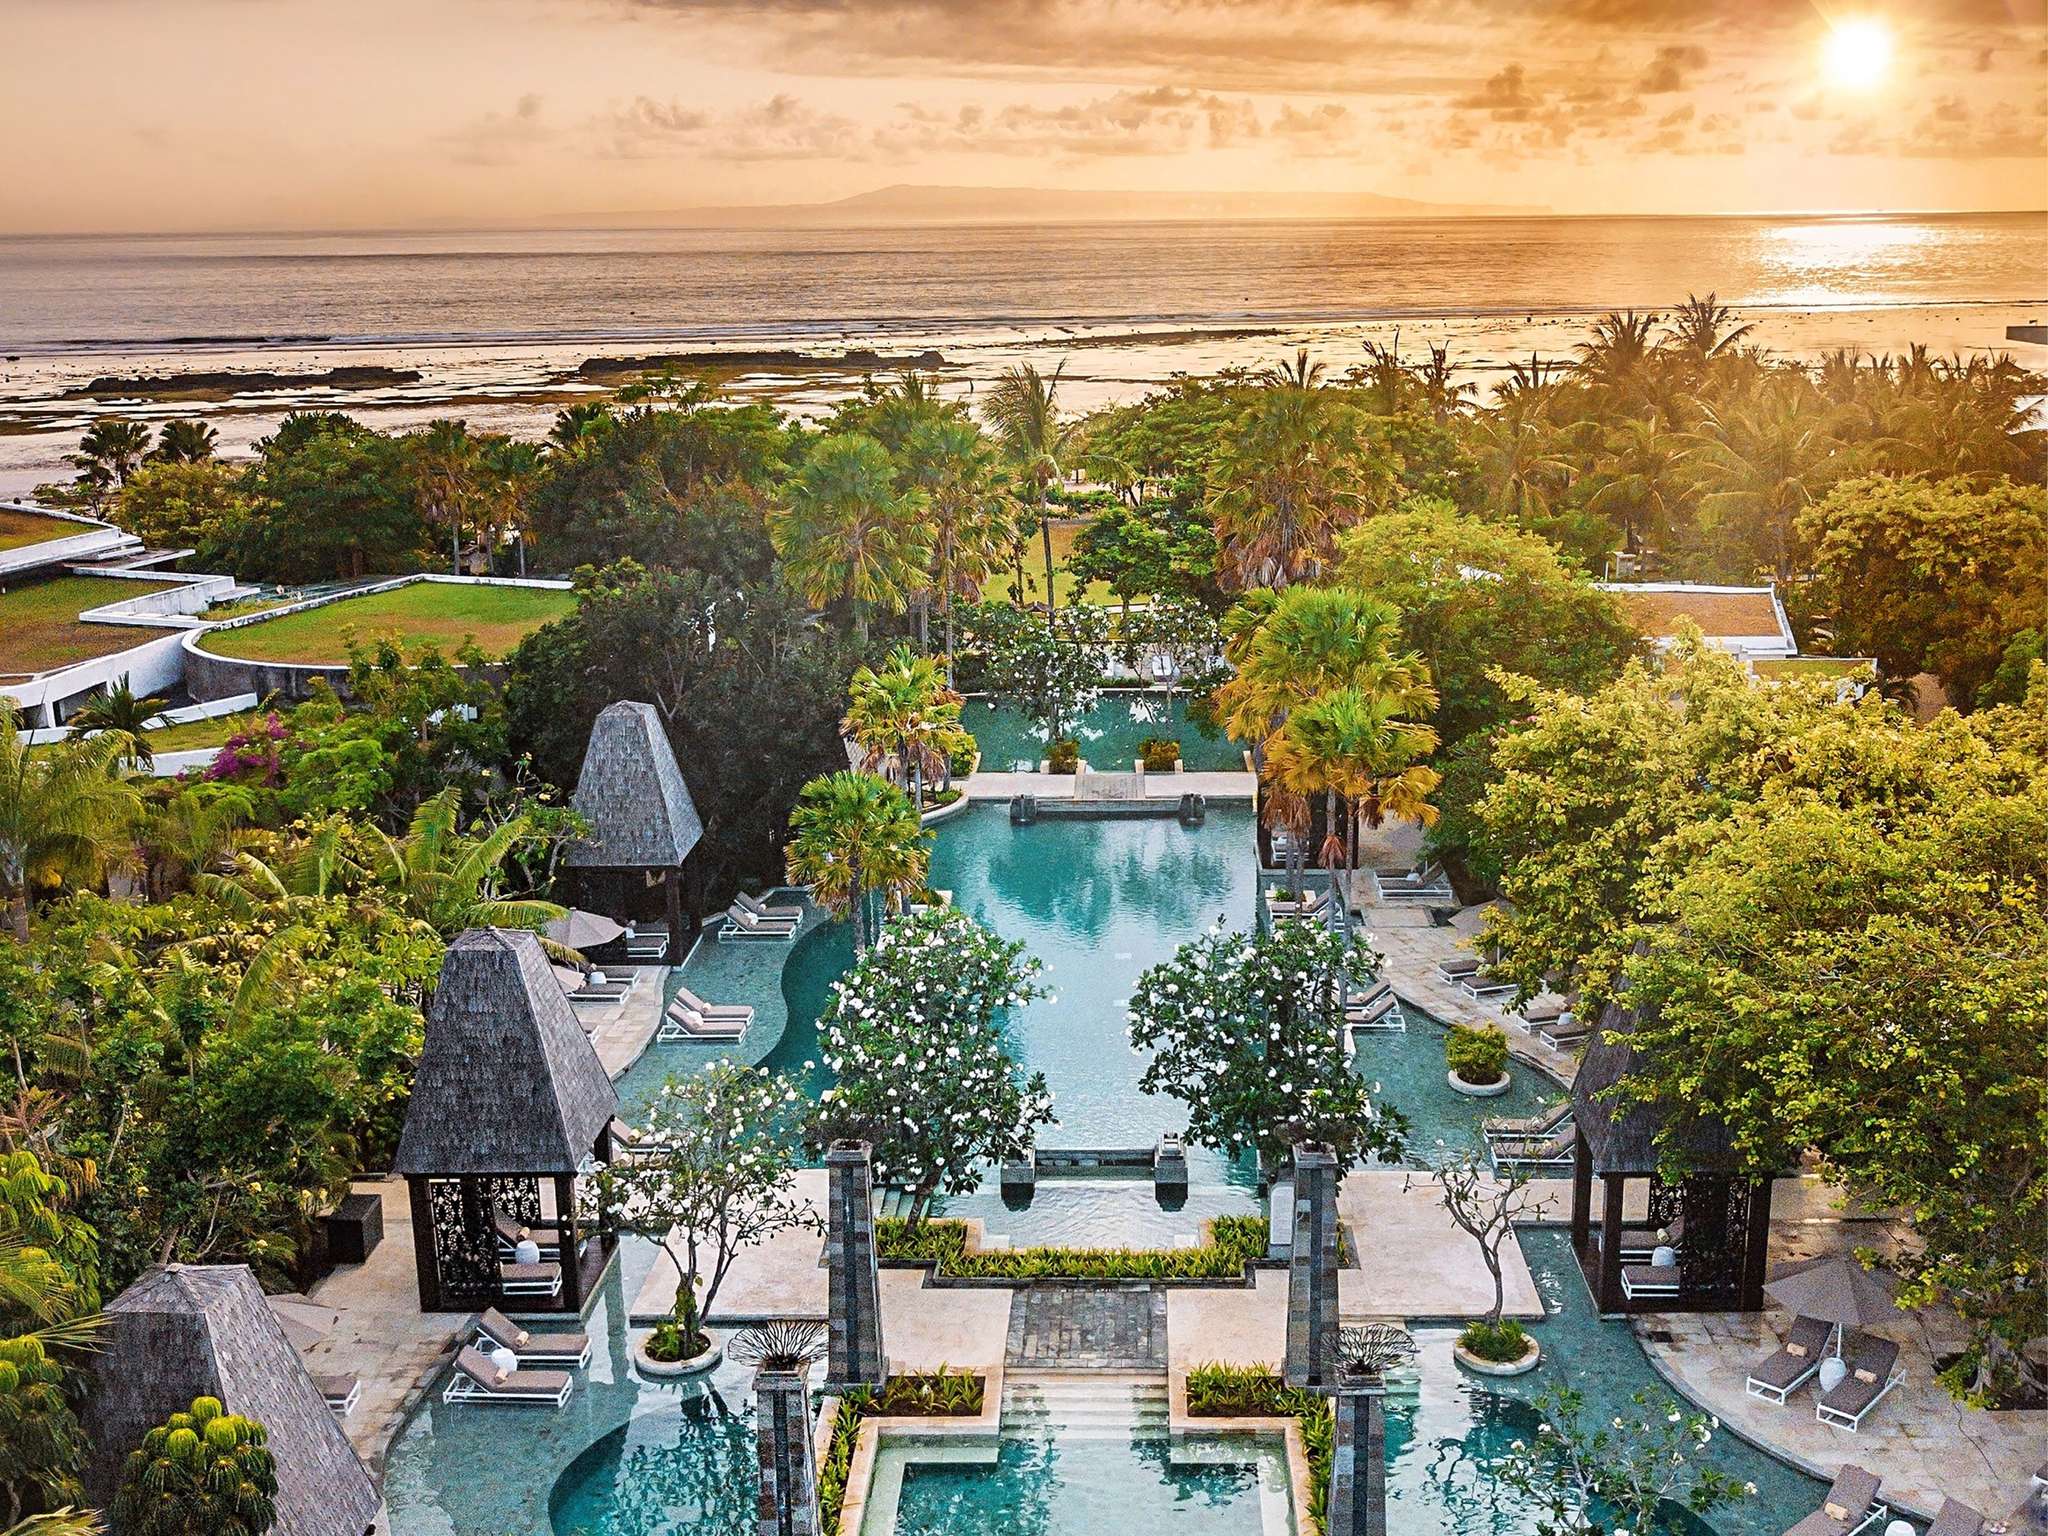 Sofitel Bali Nusa Dua Beach Resort 5 Star Luxury Resort All All